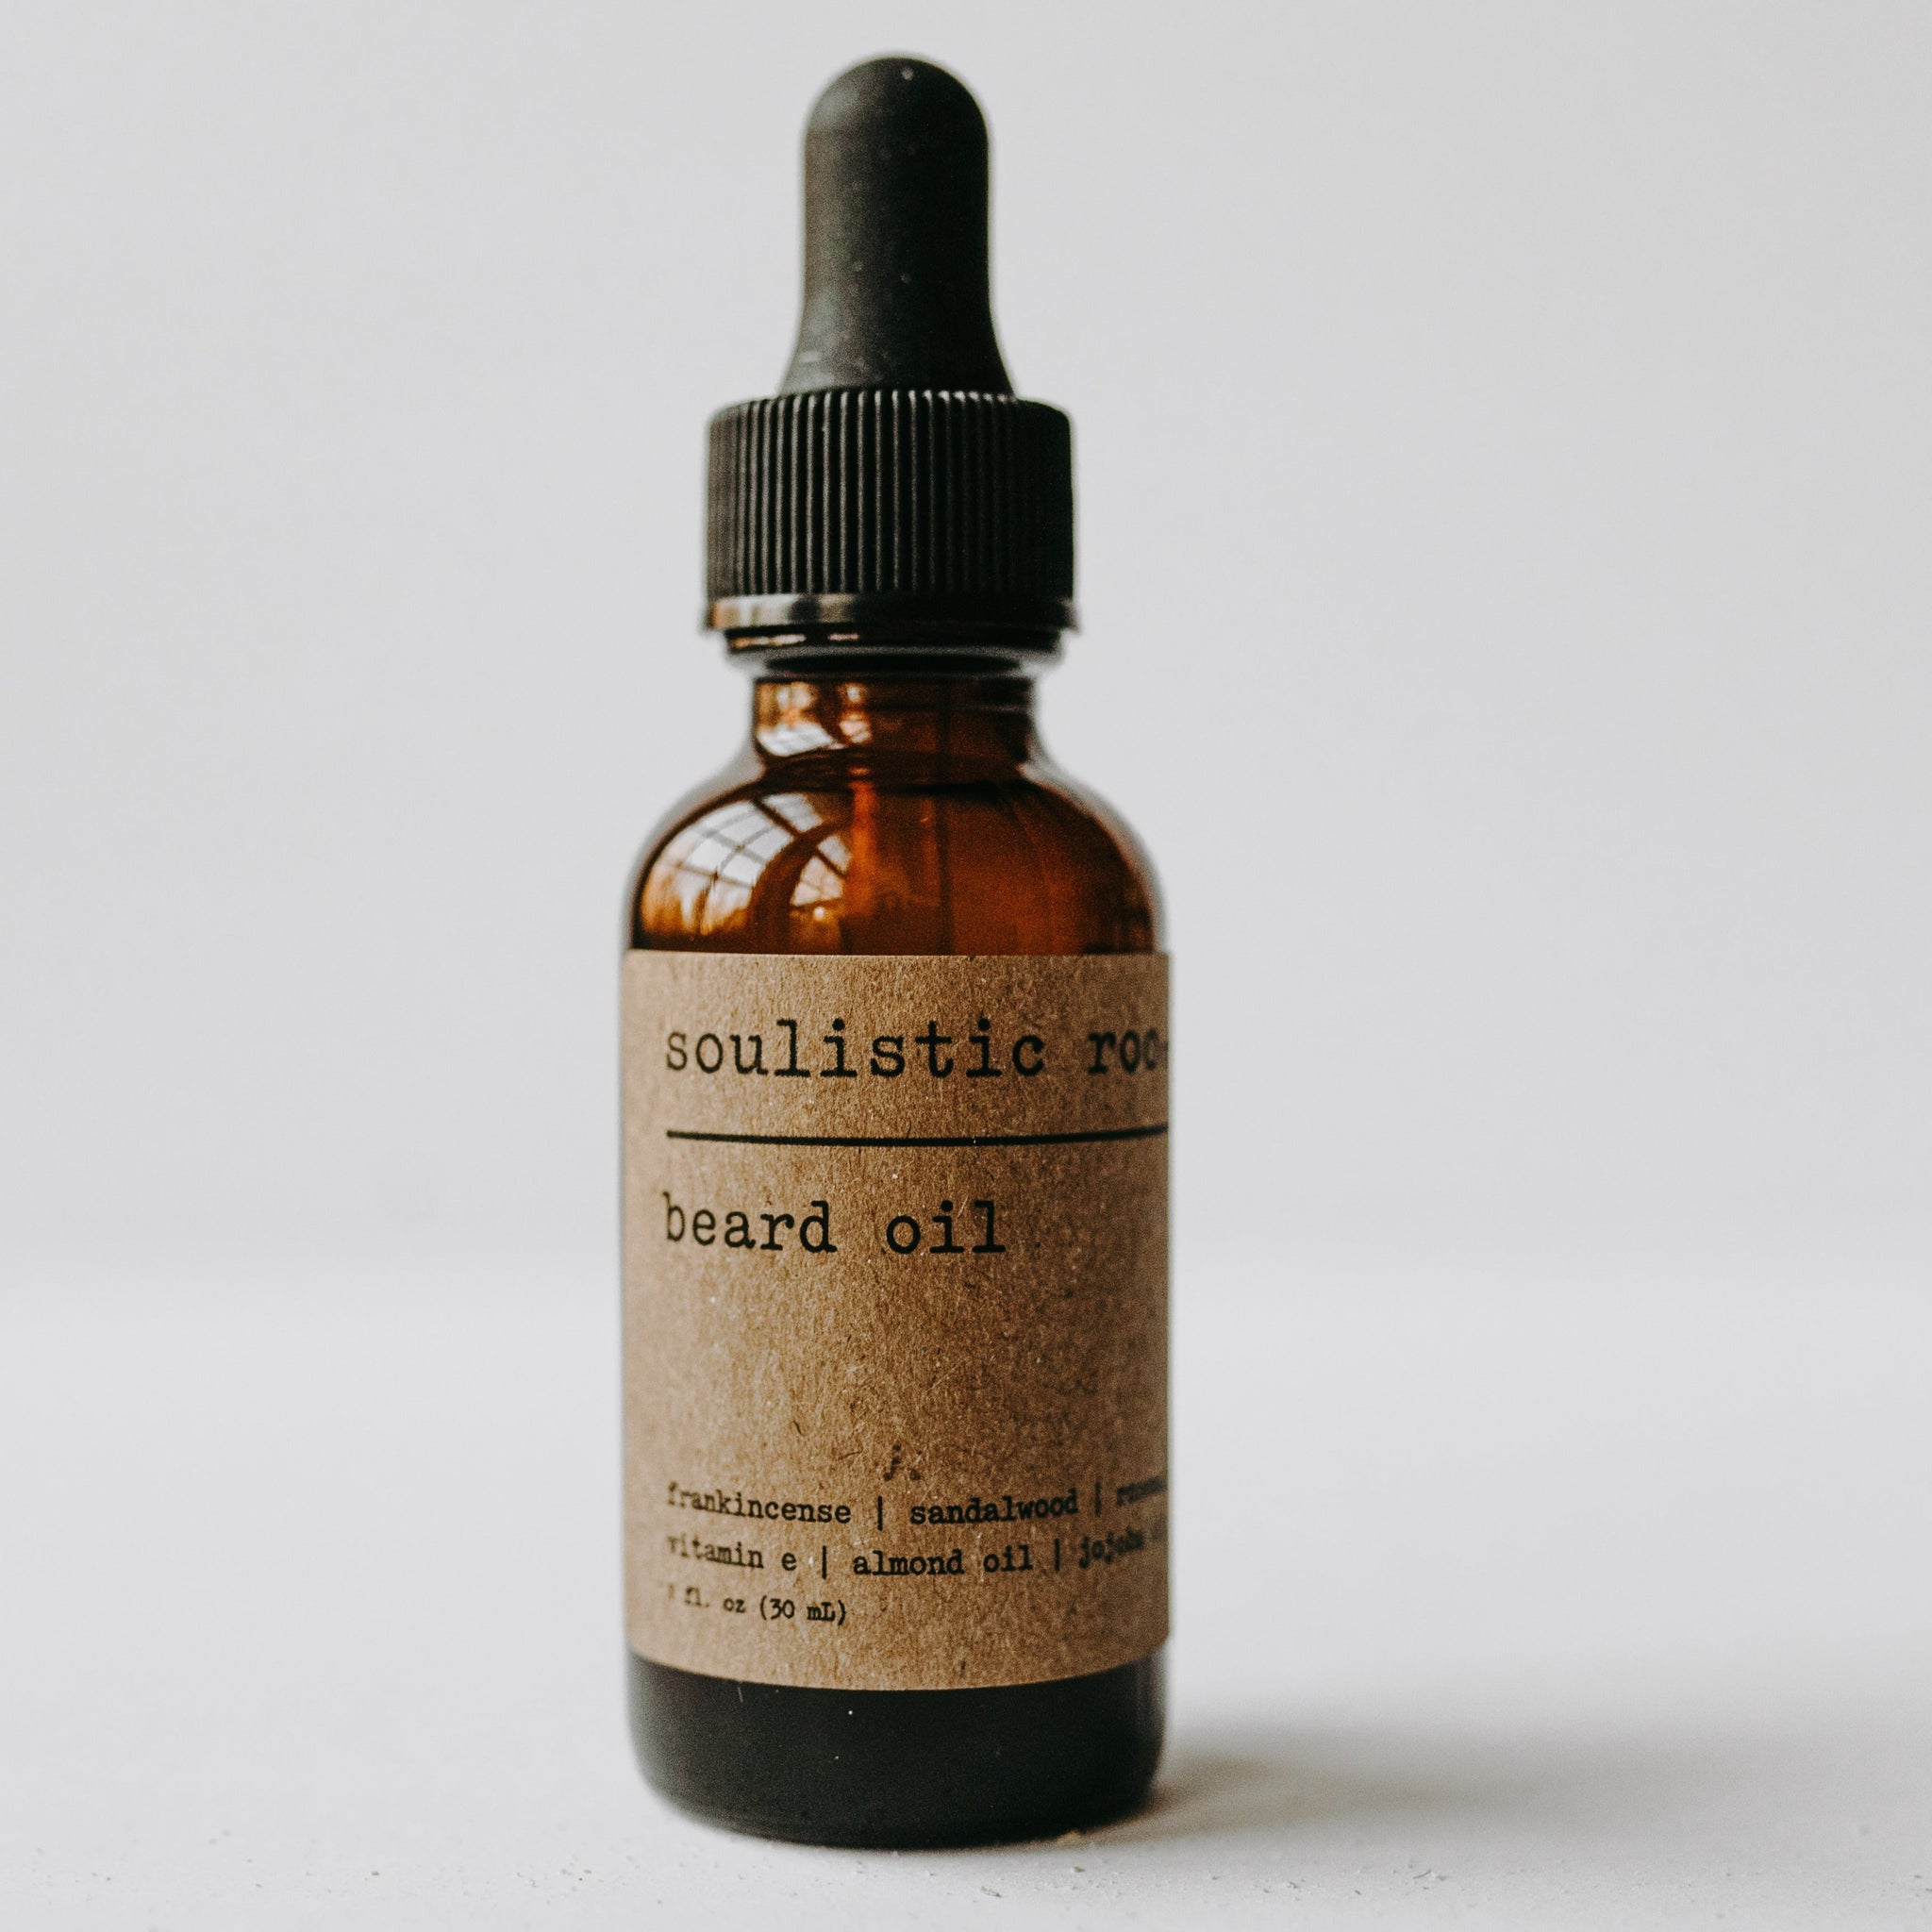 Beard oil in an amber bottle with glass dropper